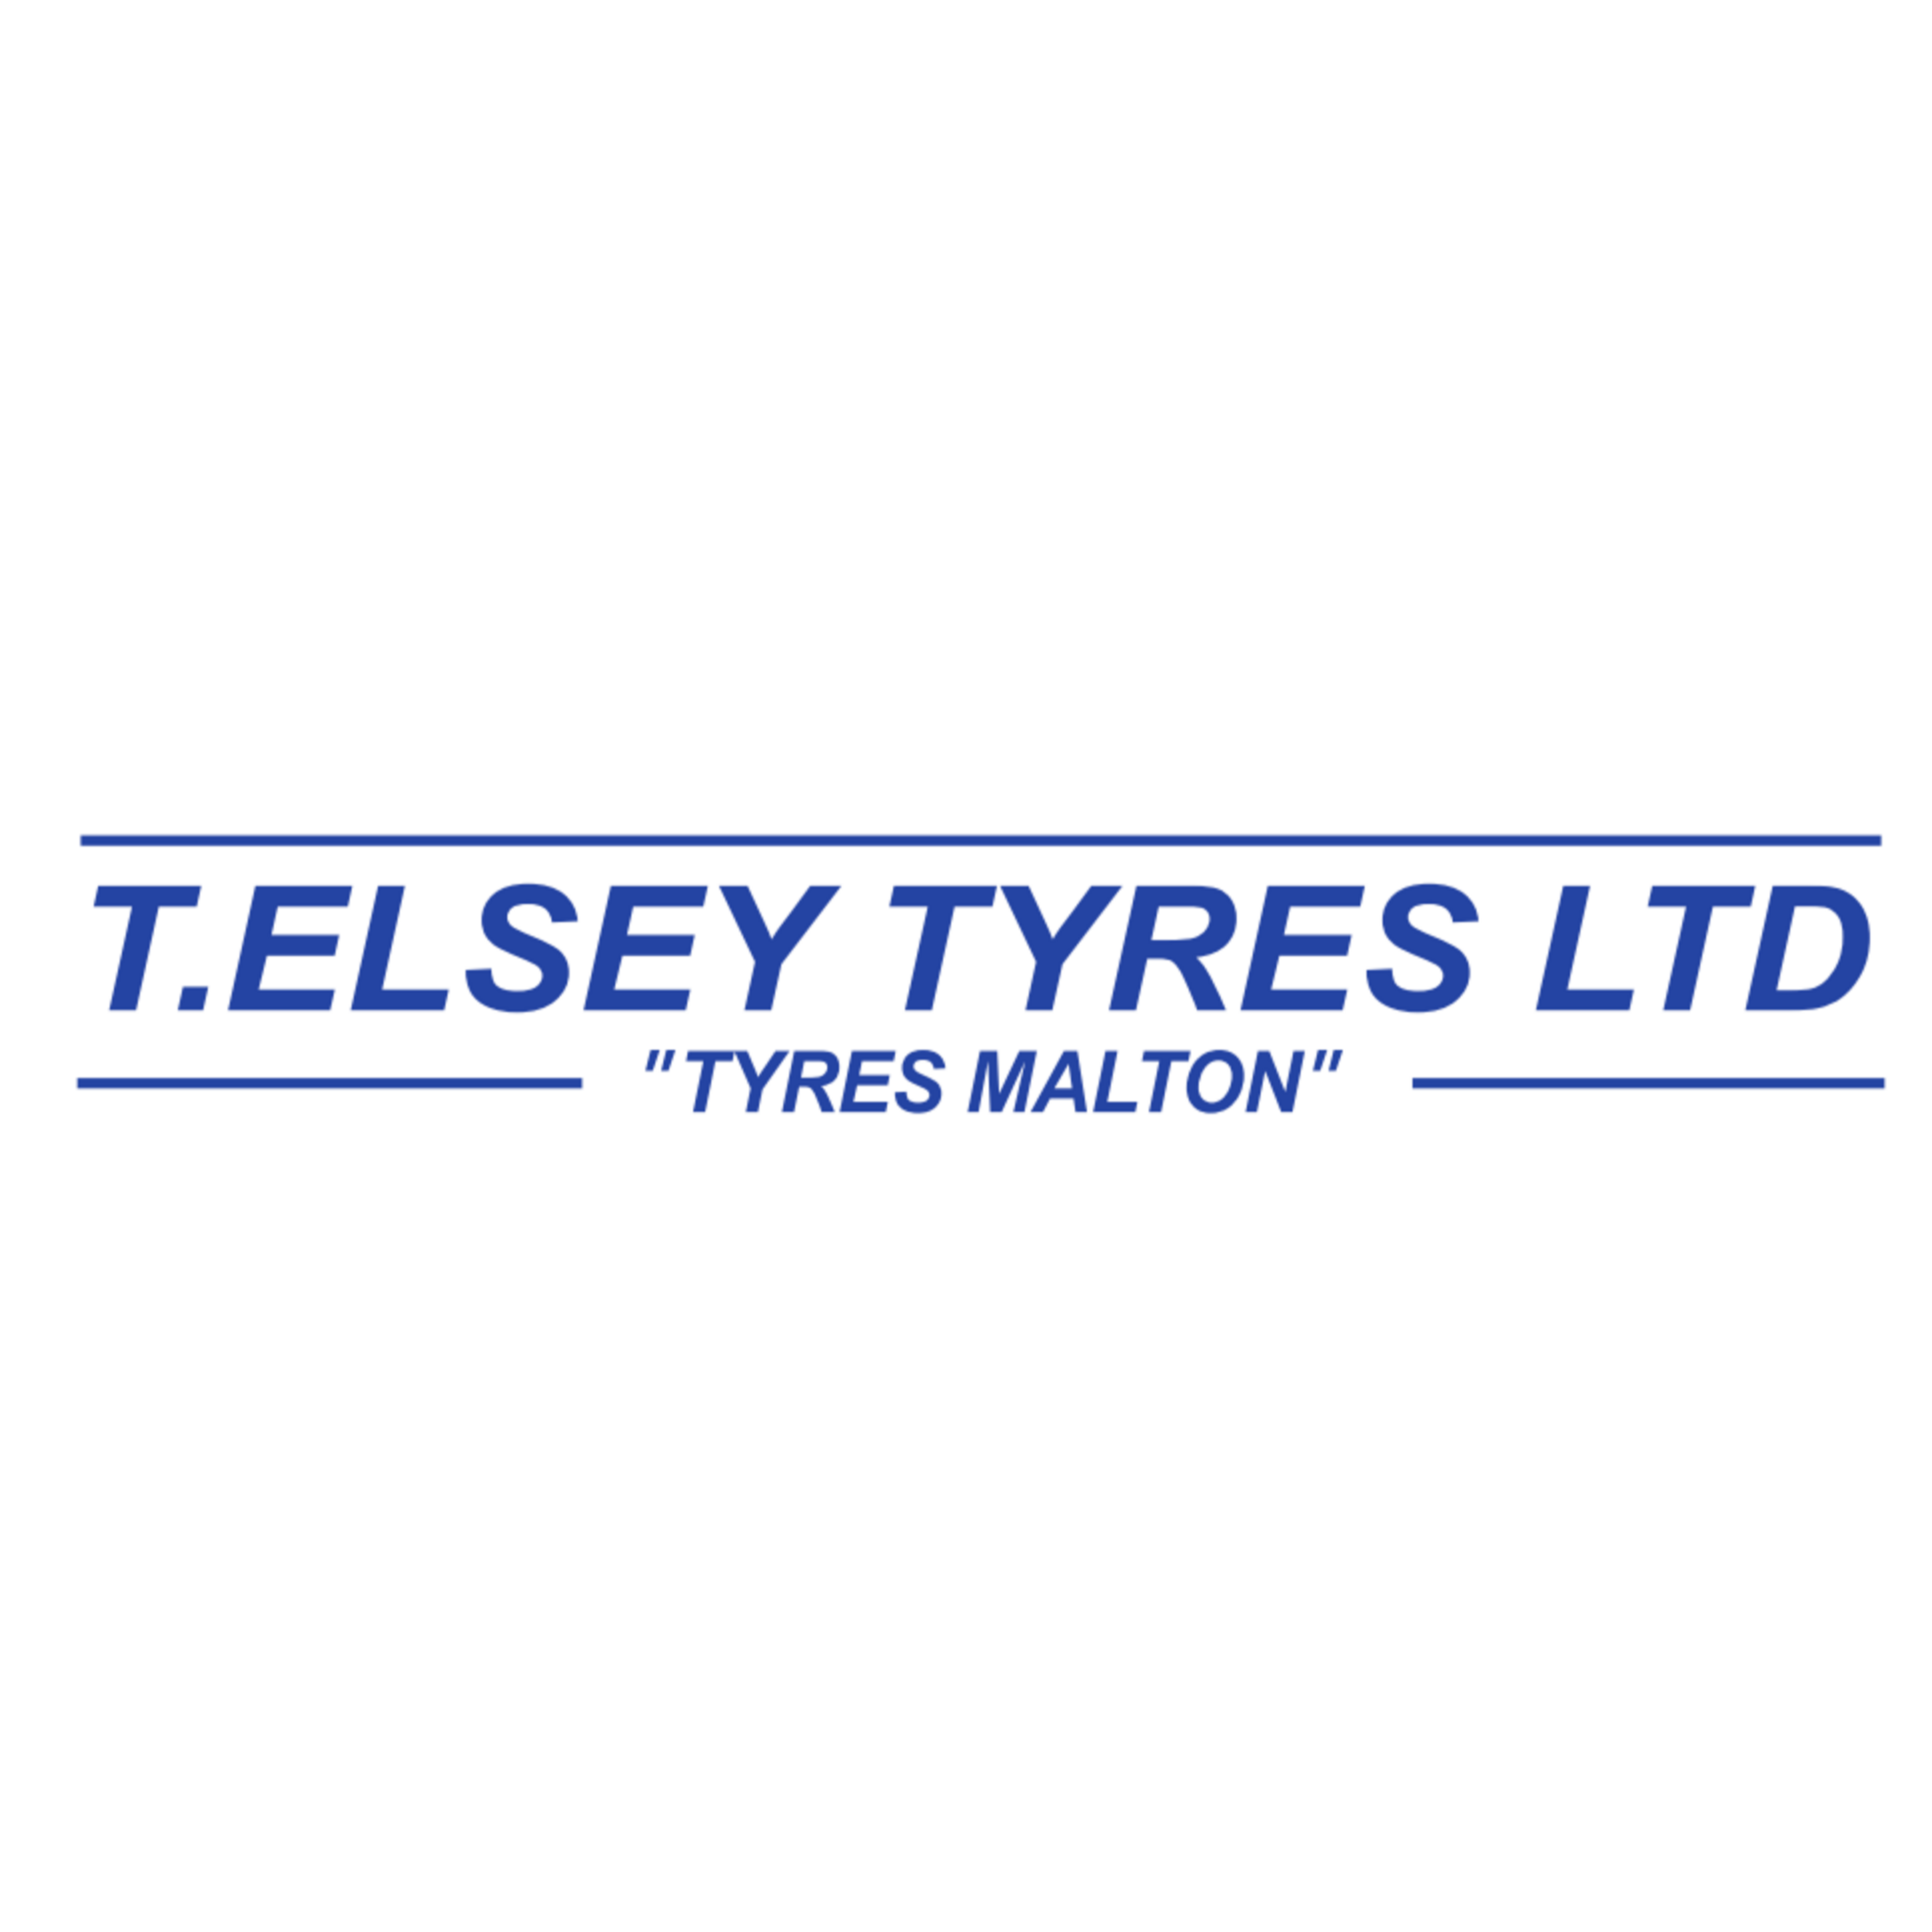 T.Elsey Tyres Ltd - Malton, North Yorkshire YO17 6BT - 01653 694667 | ShowMeLocal.com